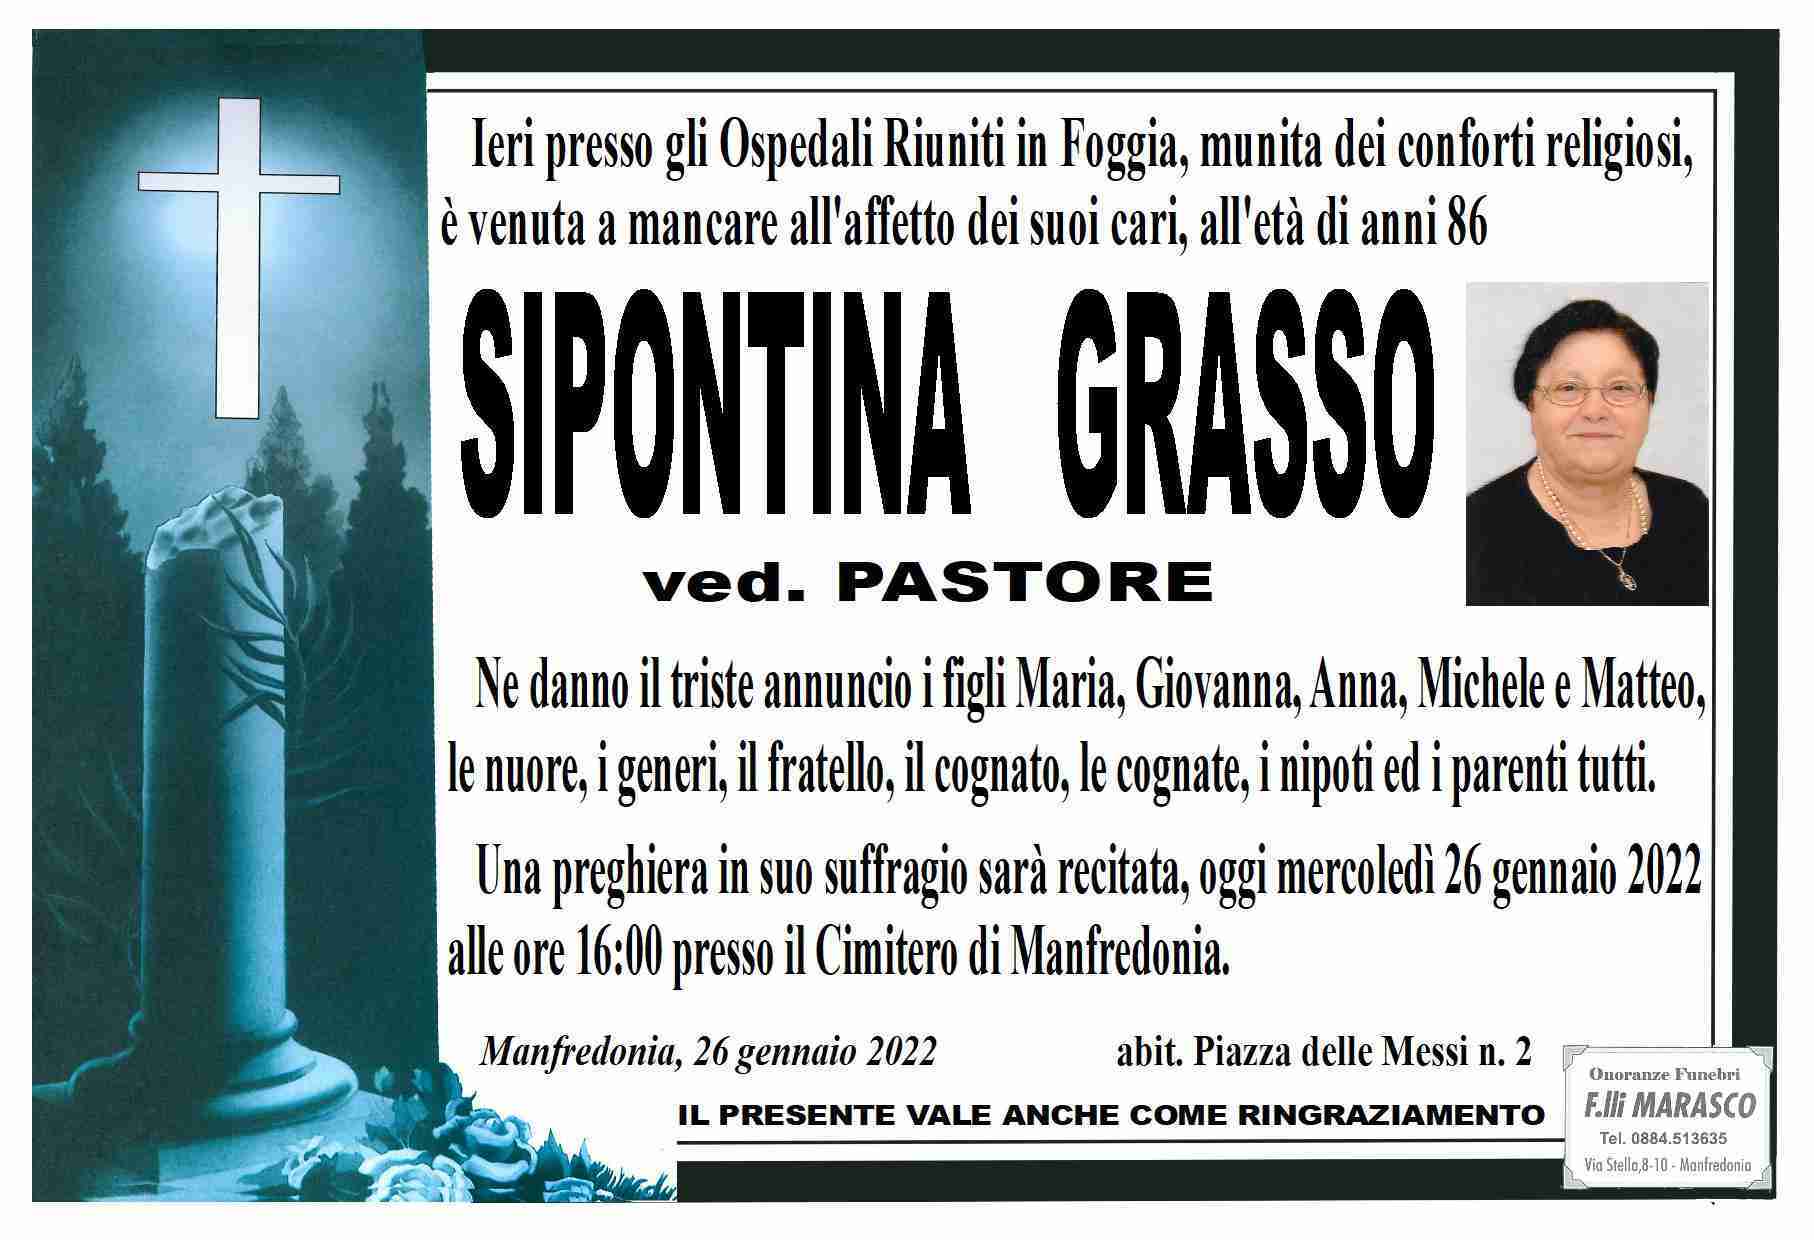 Sipontina Grasso